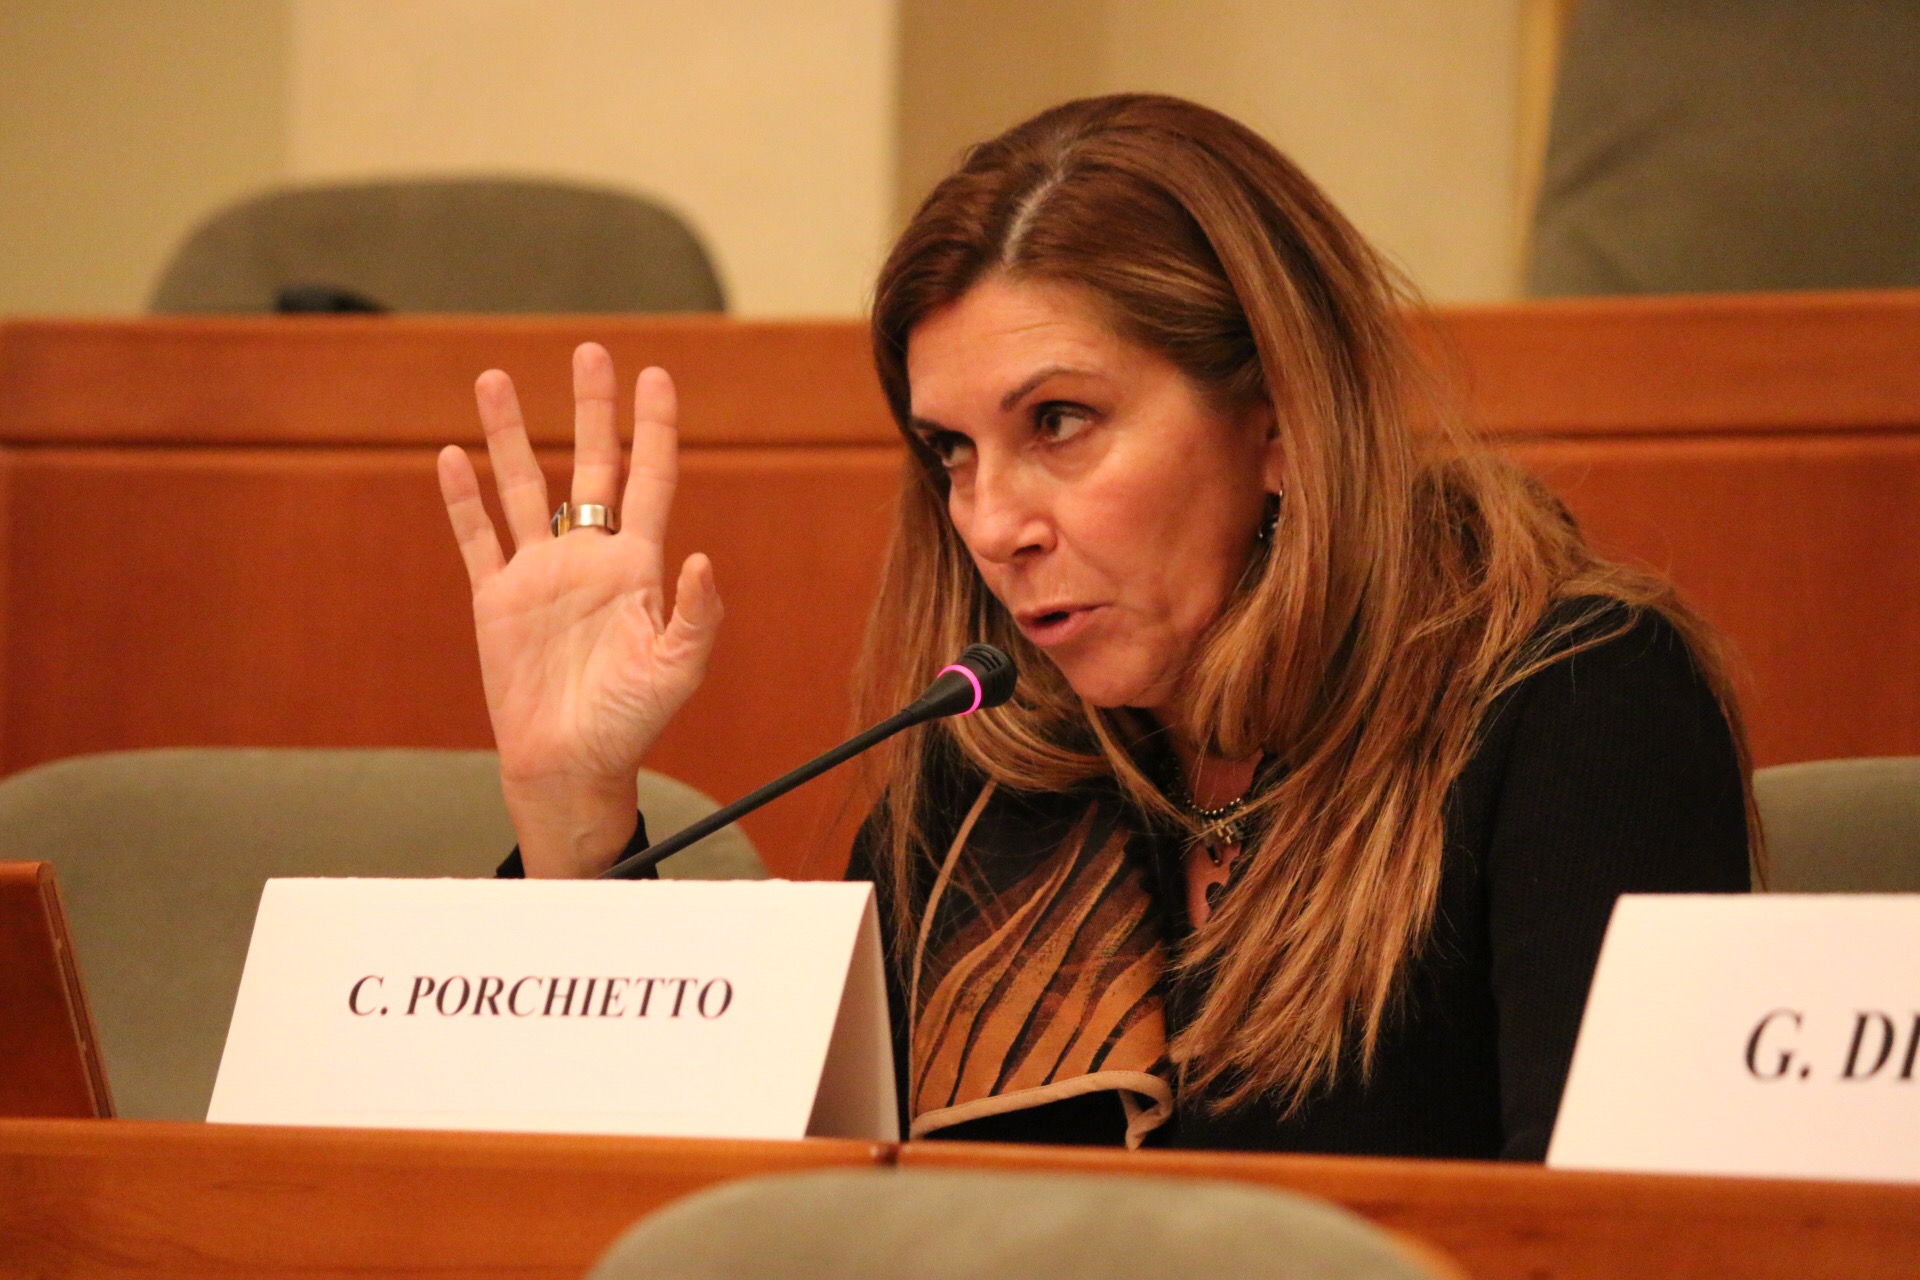 Claudia Porchietto